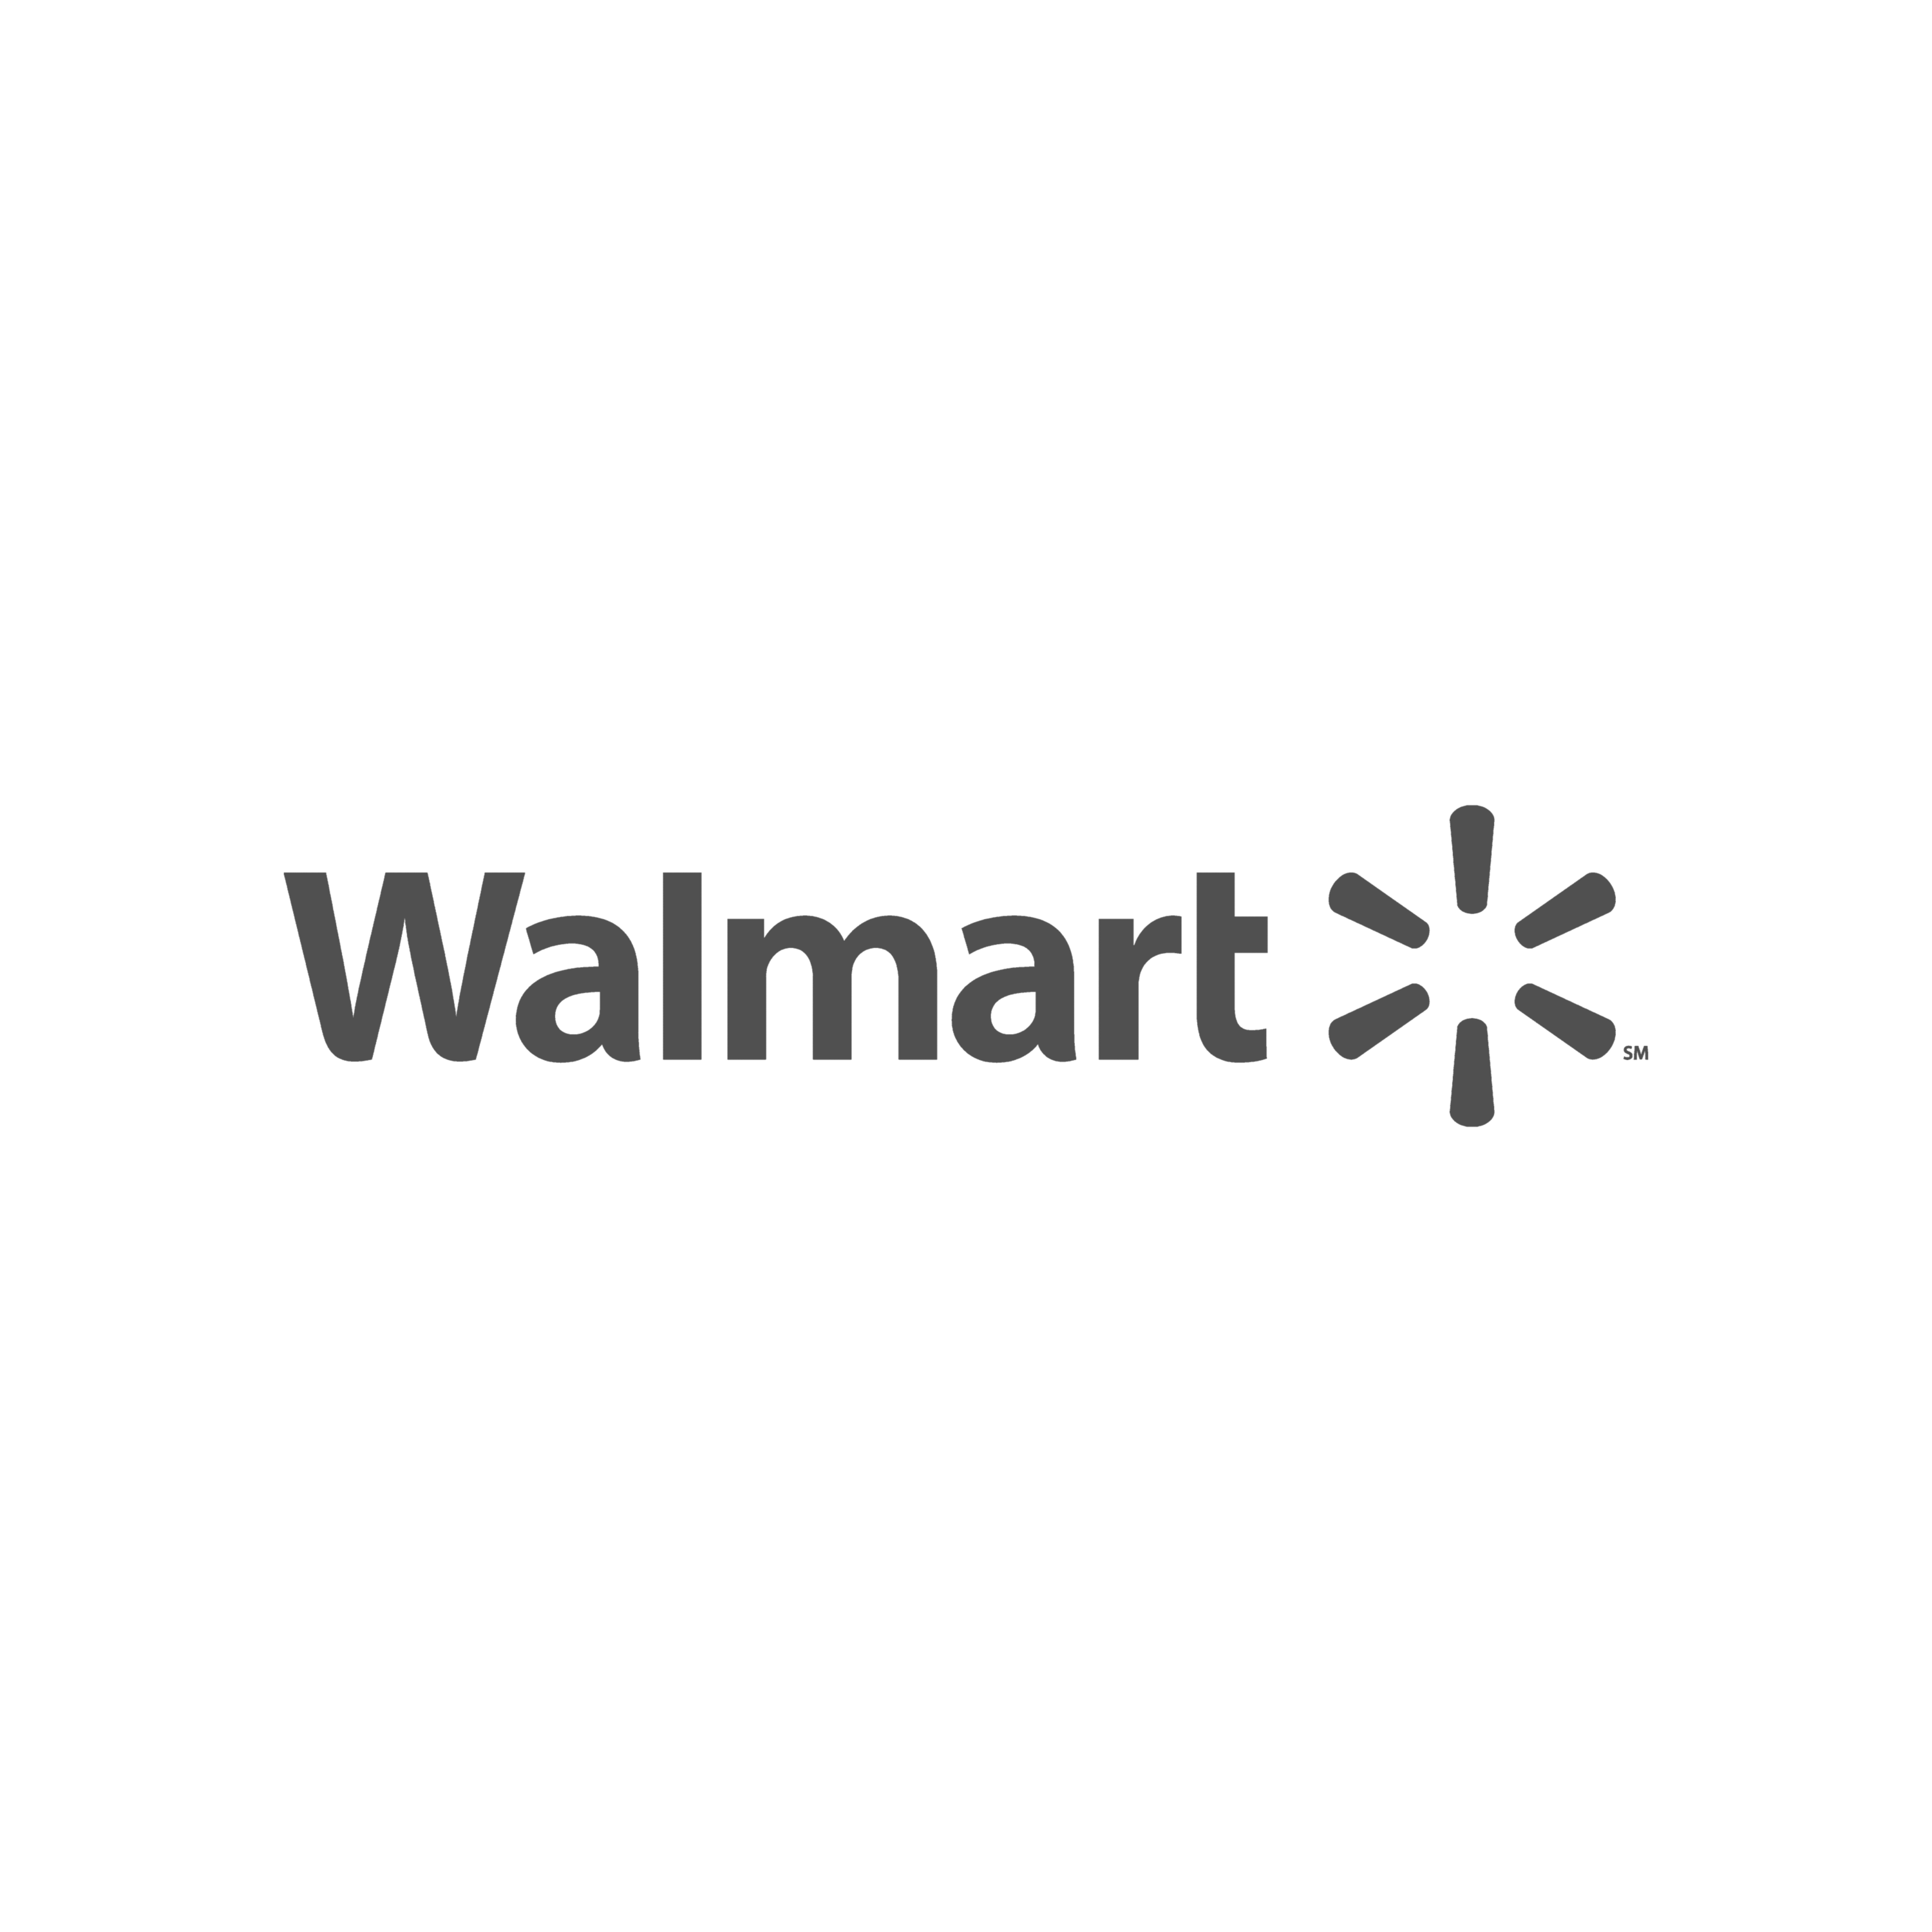 A walmart logo